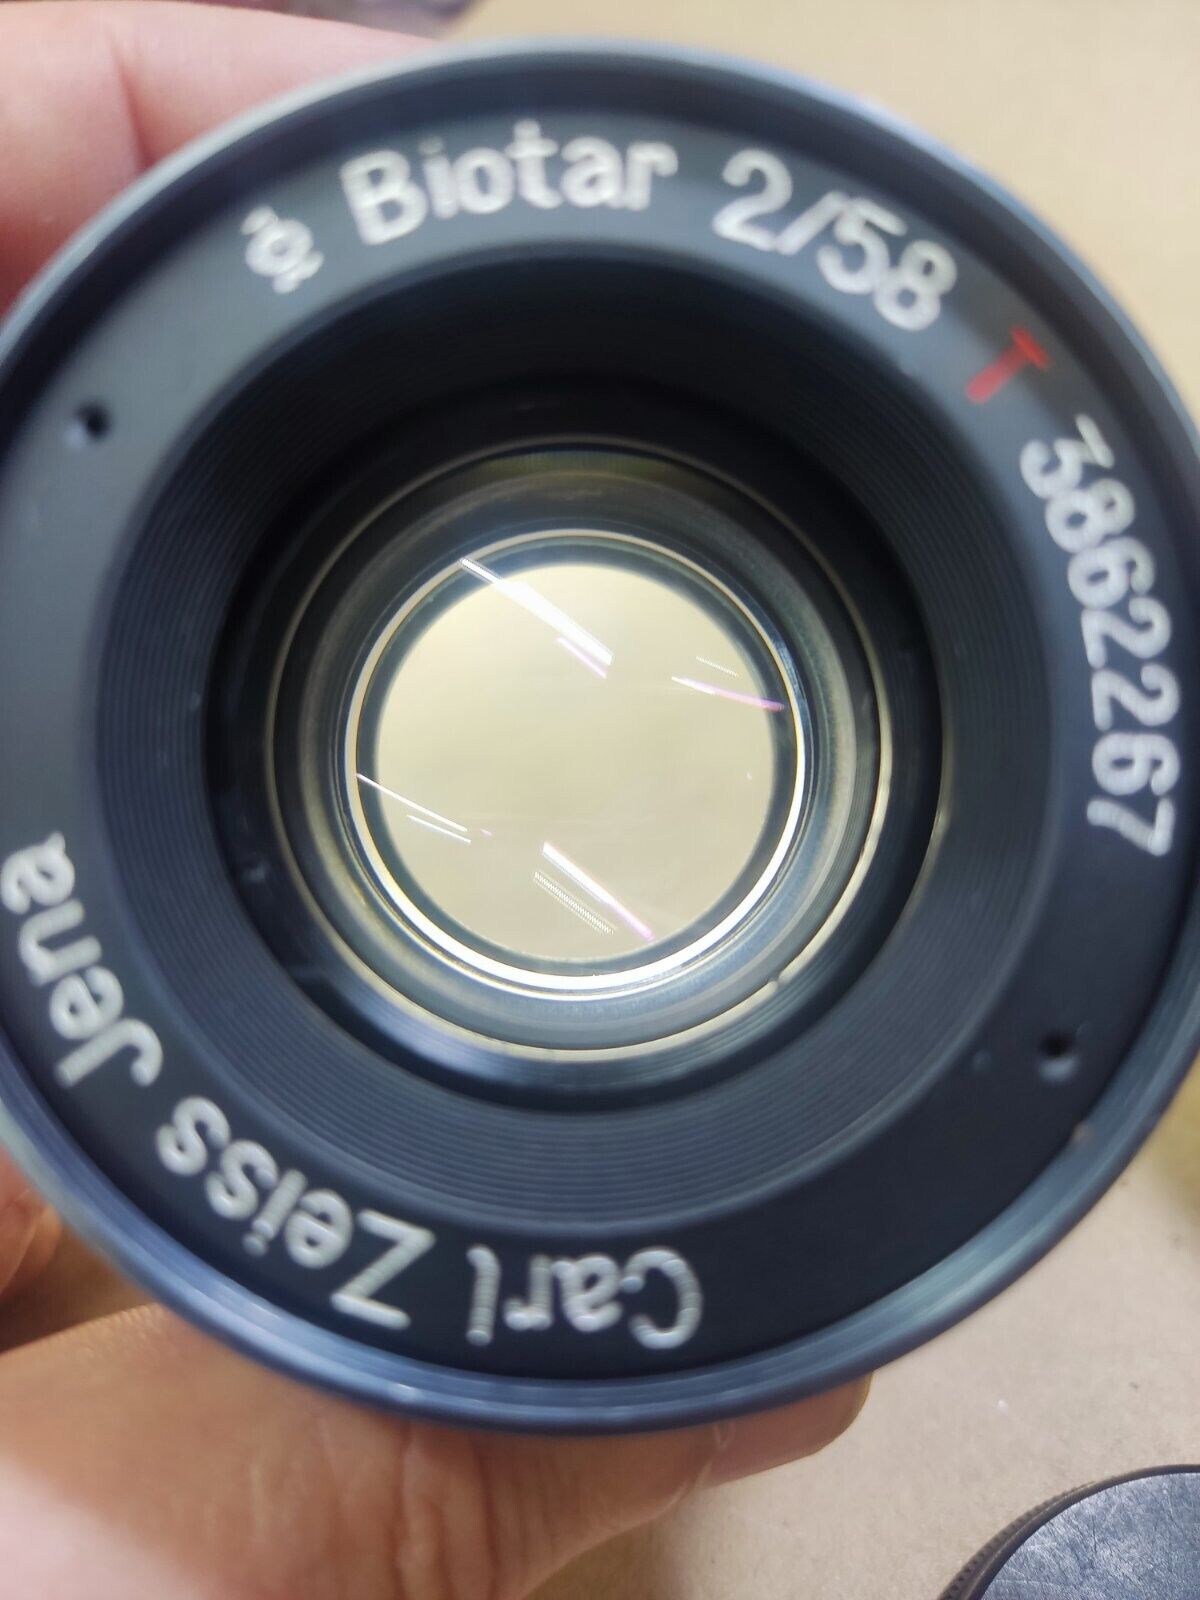 Carl Zeiss Biotar red T Replica Helios 44M 58mm f/2 portrait lens Bokeh King